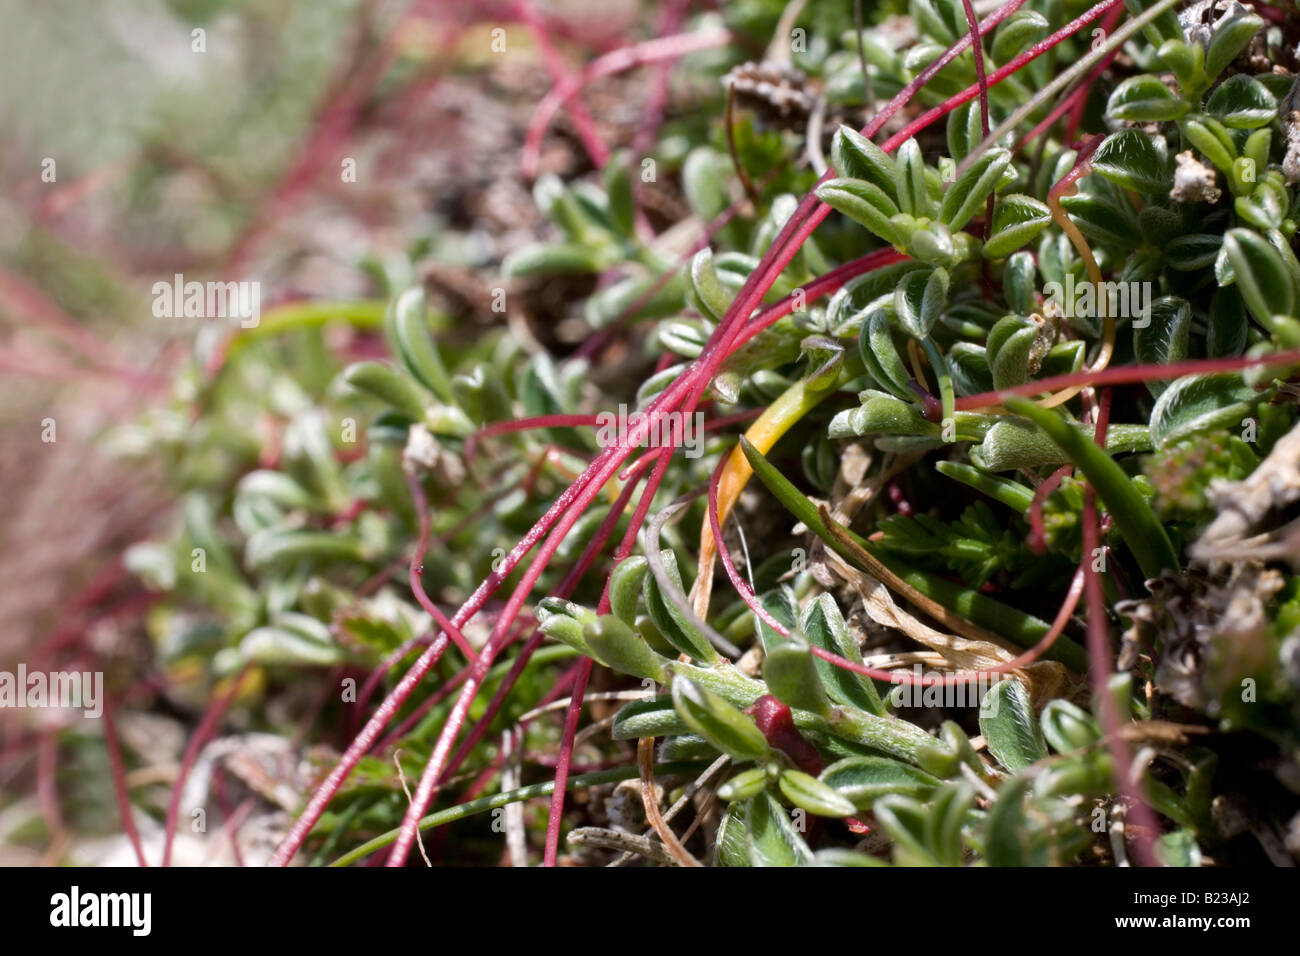 dodder Cuscuta epithymum growing on hairy greenweed Stock Photo